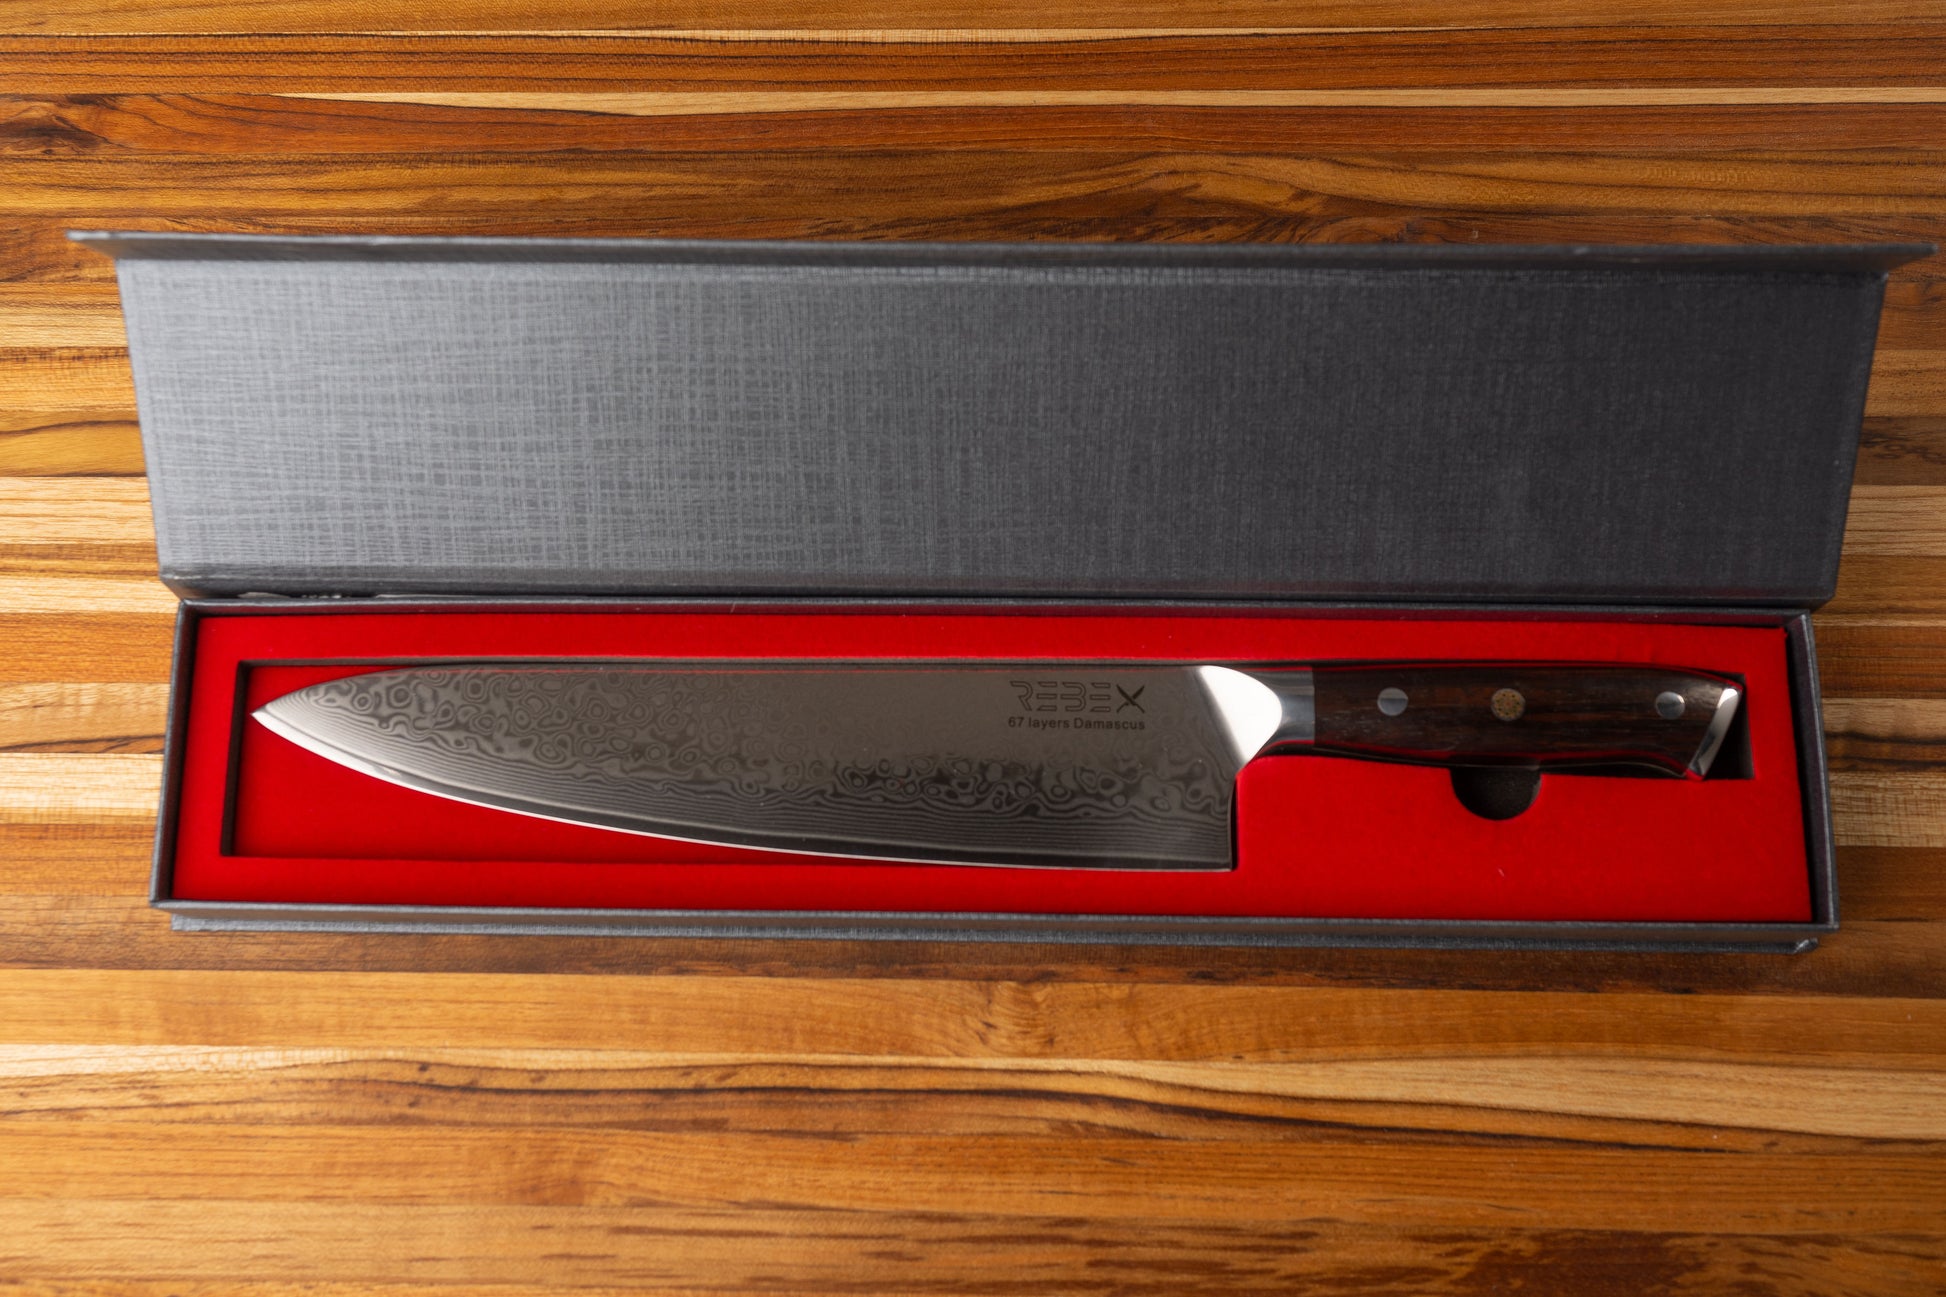 10 REBEX Damascus Chef knife